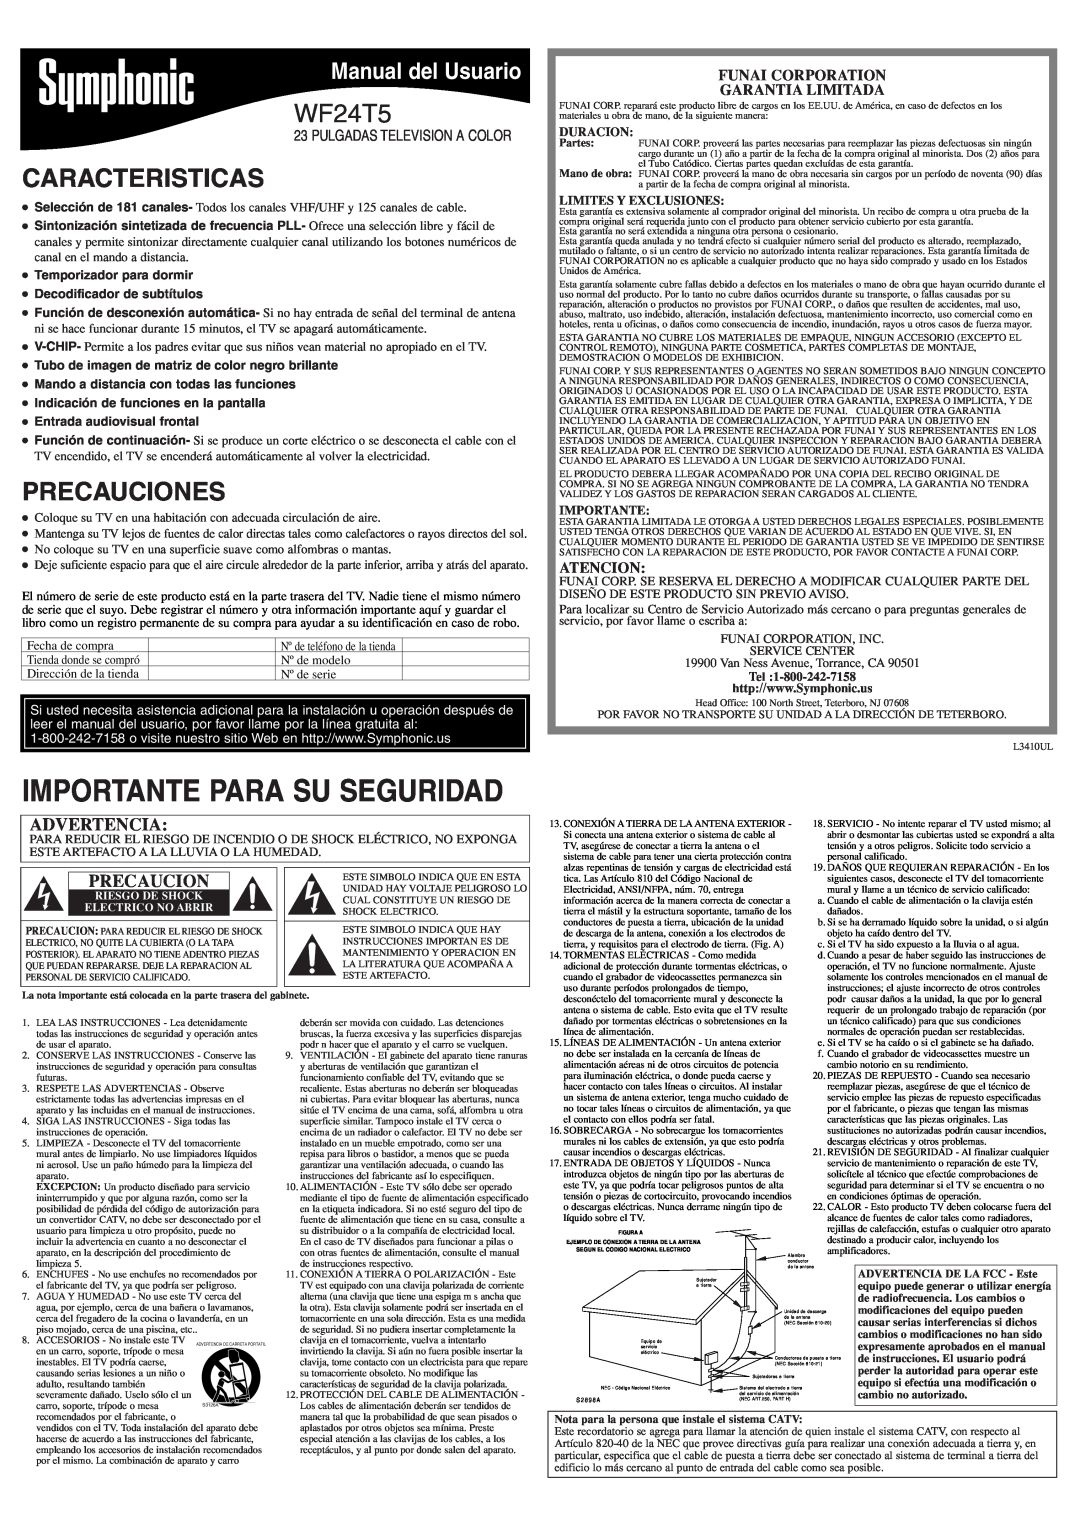 Symphonic WF24T5 Caracteristicas, Precauciones, Manual del Usuario, Funai Corporation Garantia Limitada, Atencion 